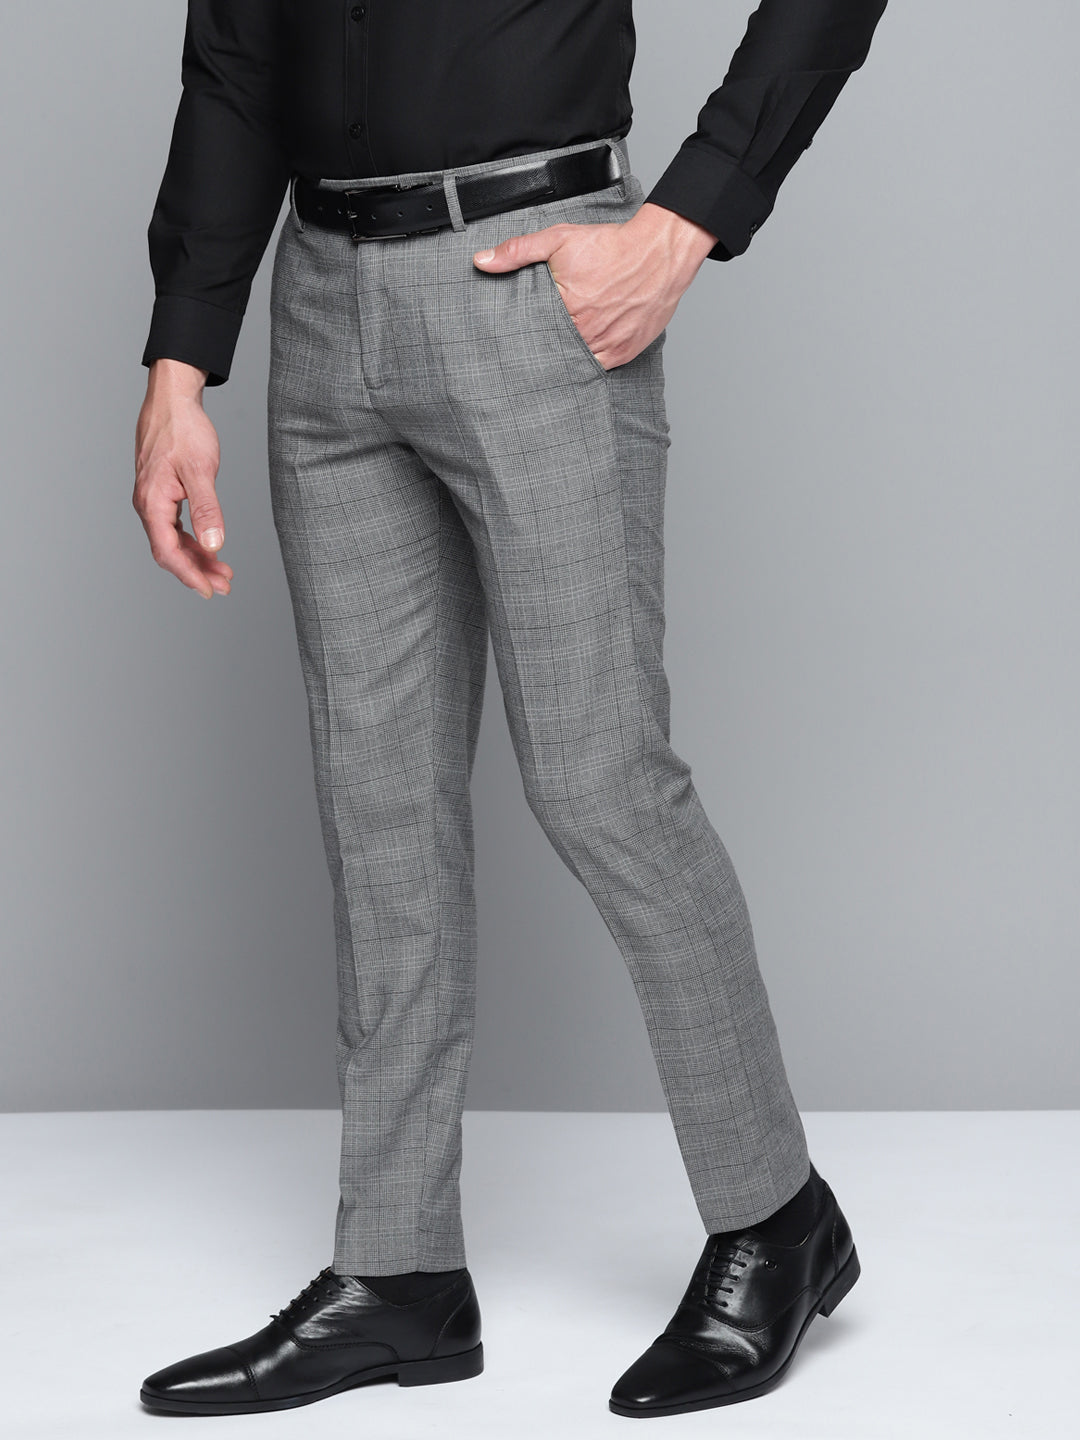 Buy DENNISON Formal Trousers & Hight Waist Pants - Men | FASHIOLA INDIA